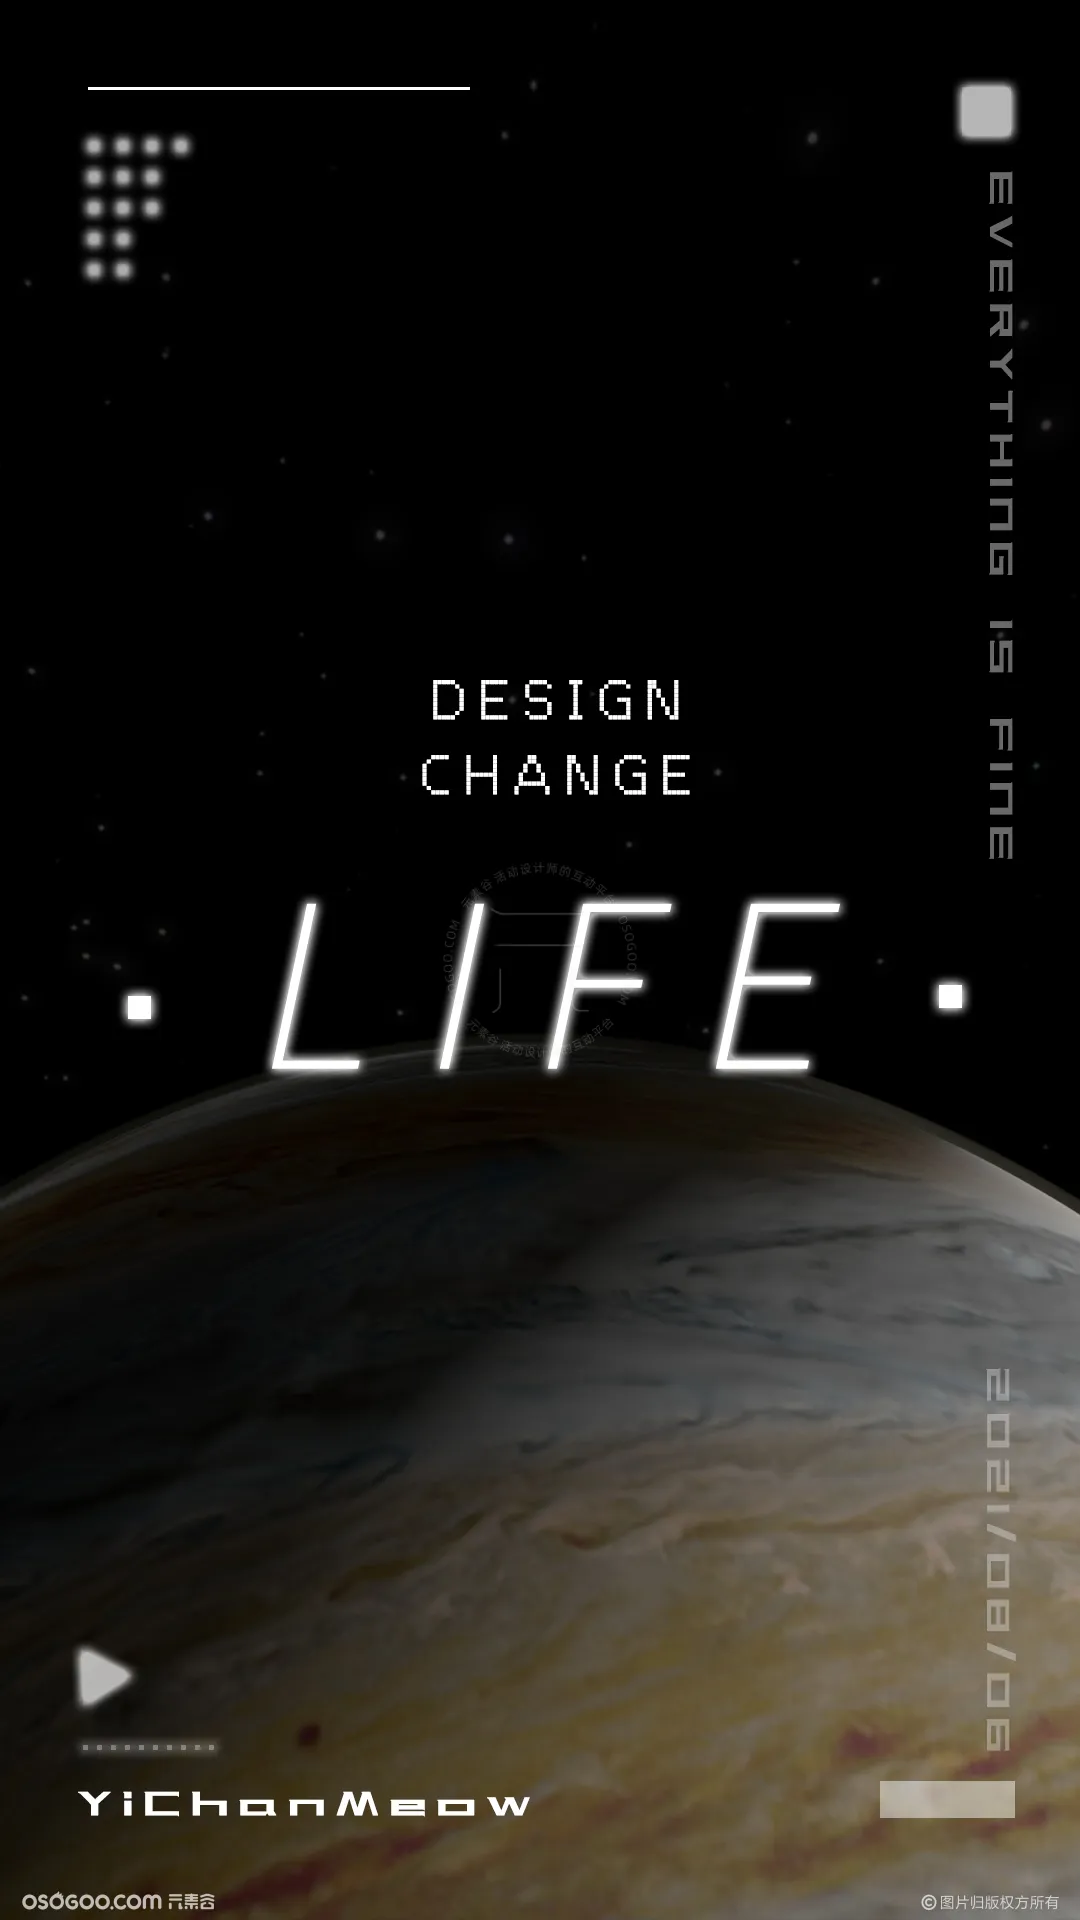 C4D渲染海报设计练习-设计改变生活